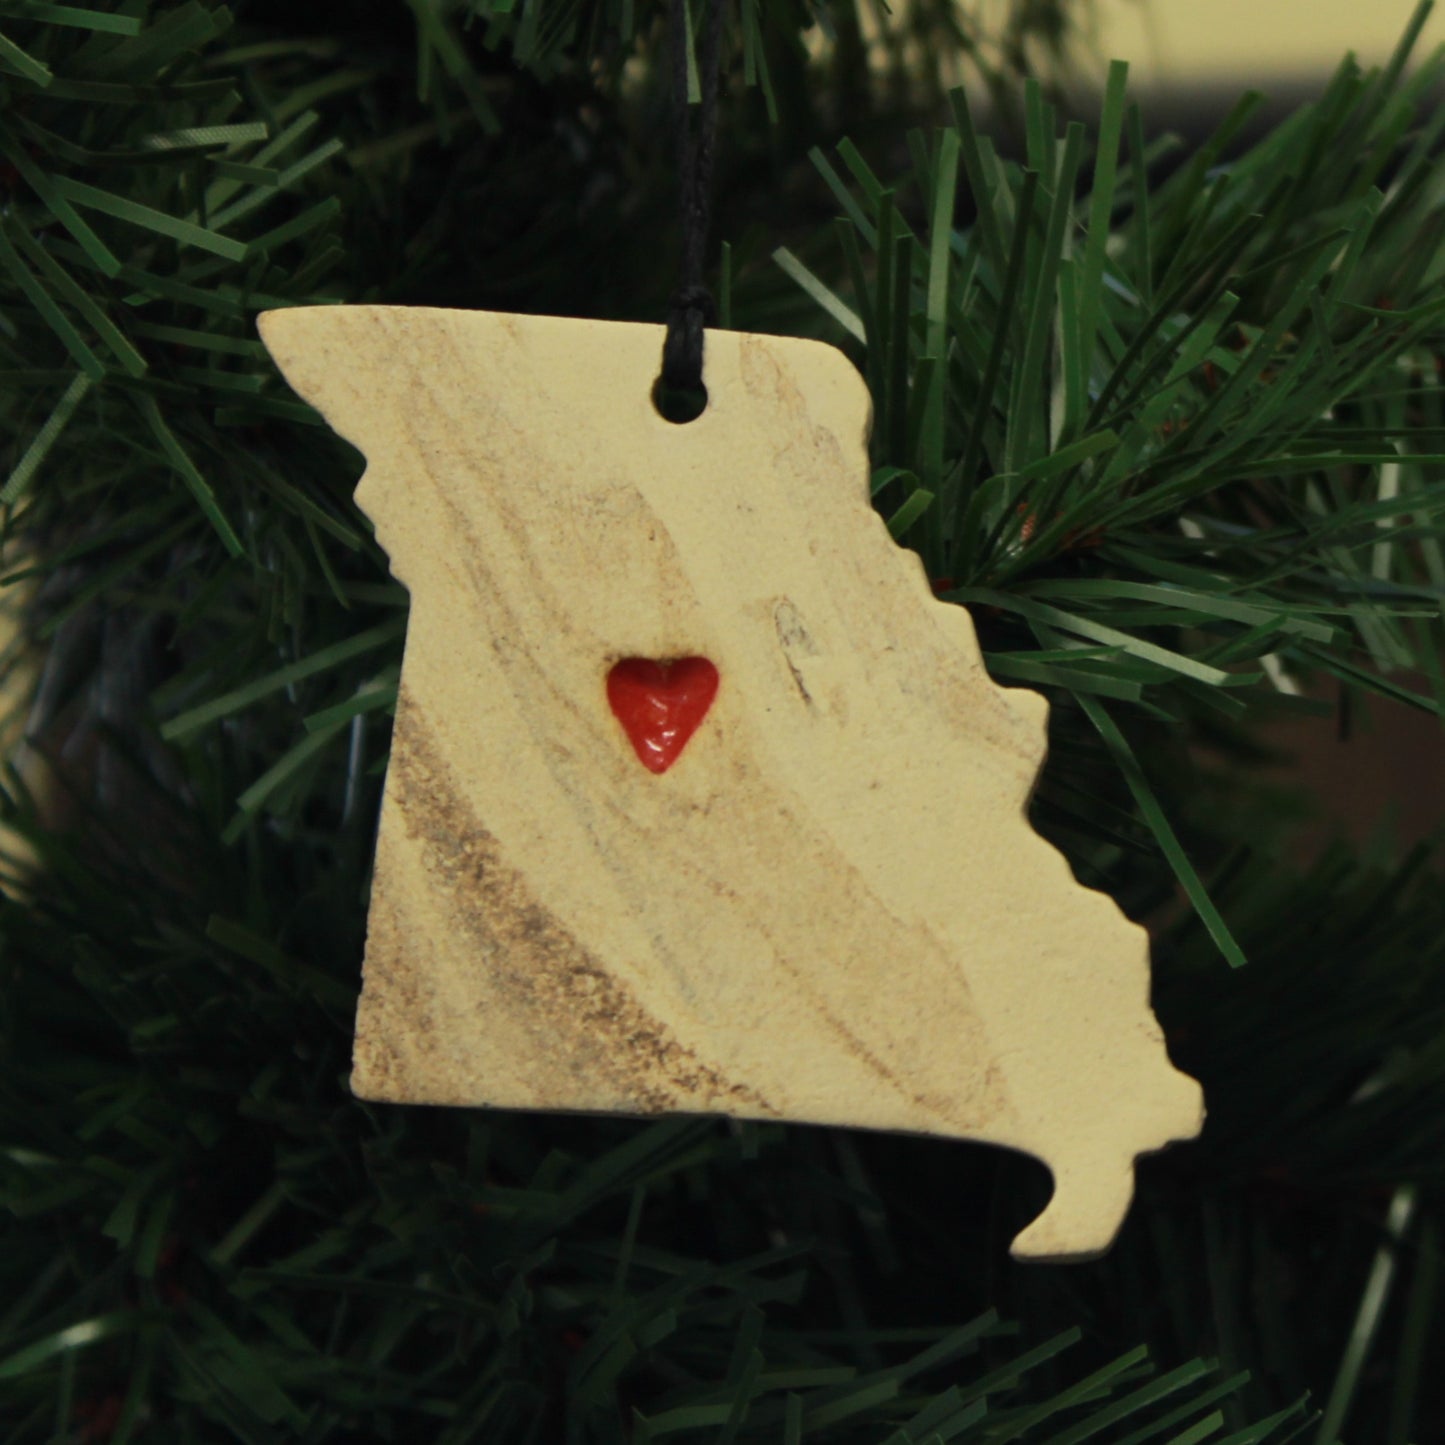 Handmade Missouri ornament